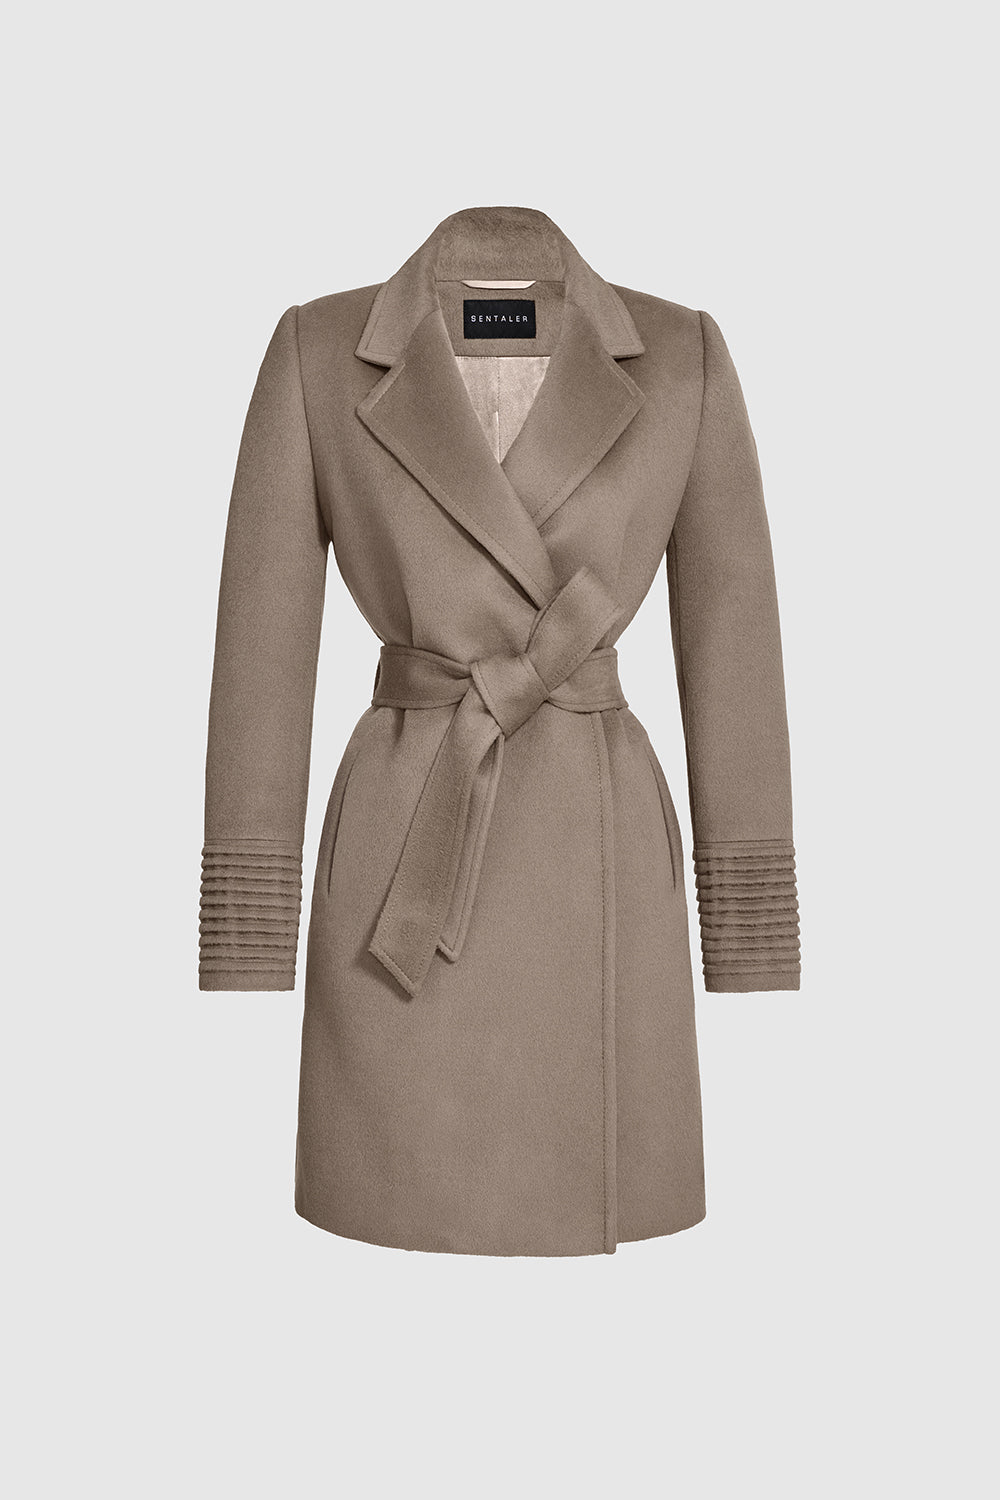 Louis Vuitton Signature Short Hooded Wrap Coat Night Blue. Size 42